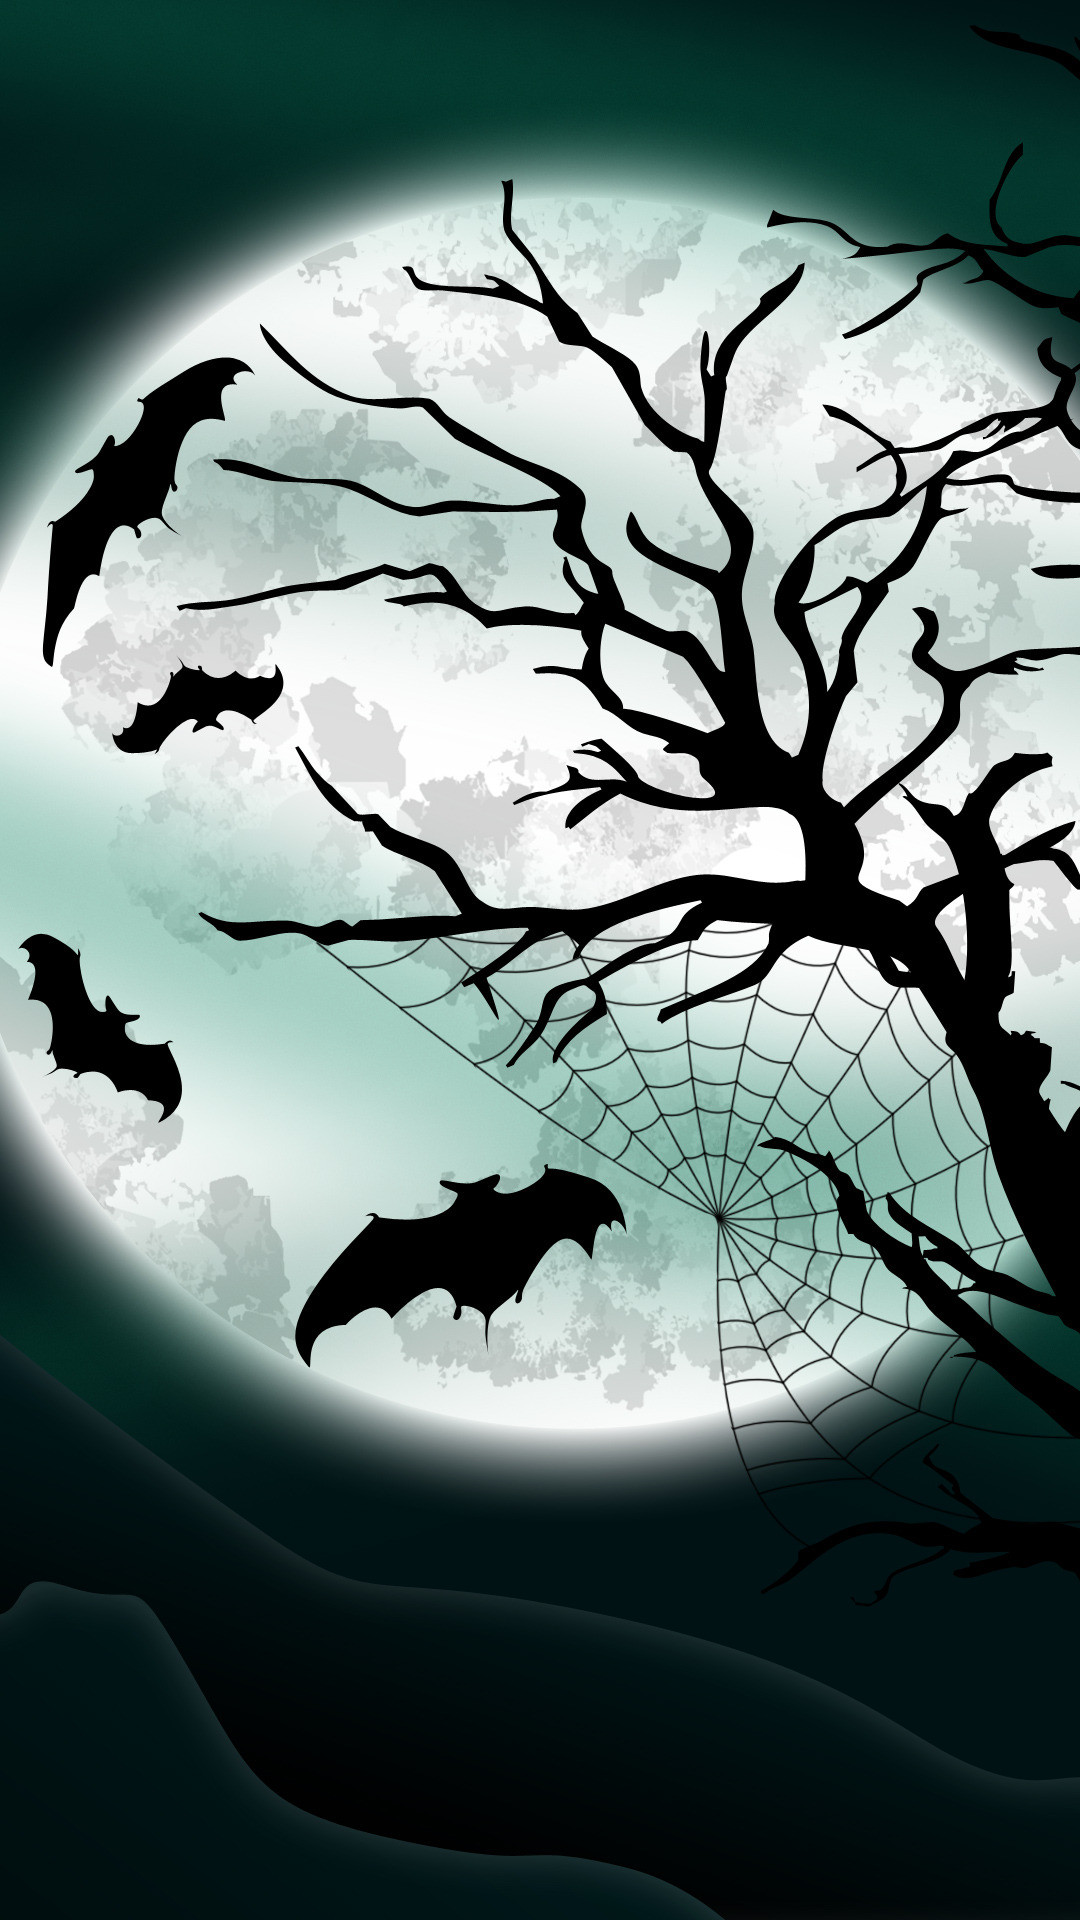 1080x1920 Night Bats Halloween iPhone 6 & iPhone 6 Plus Wallpaper